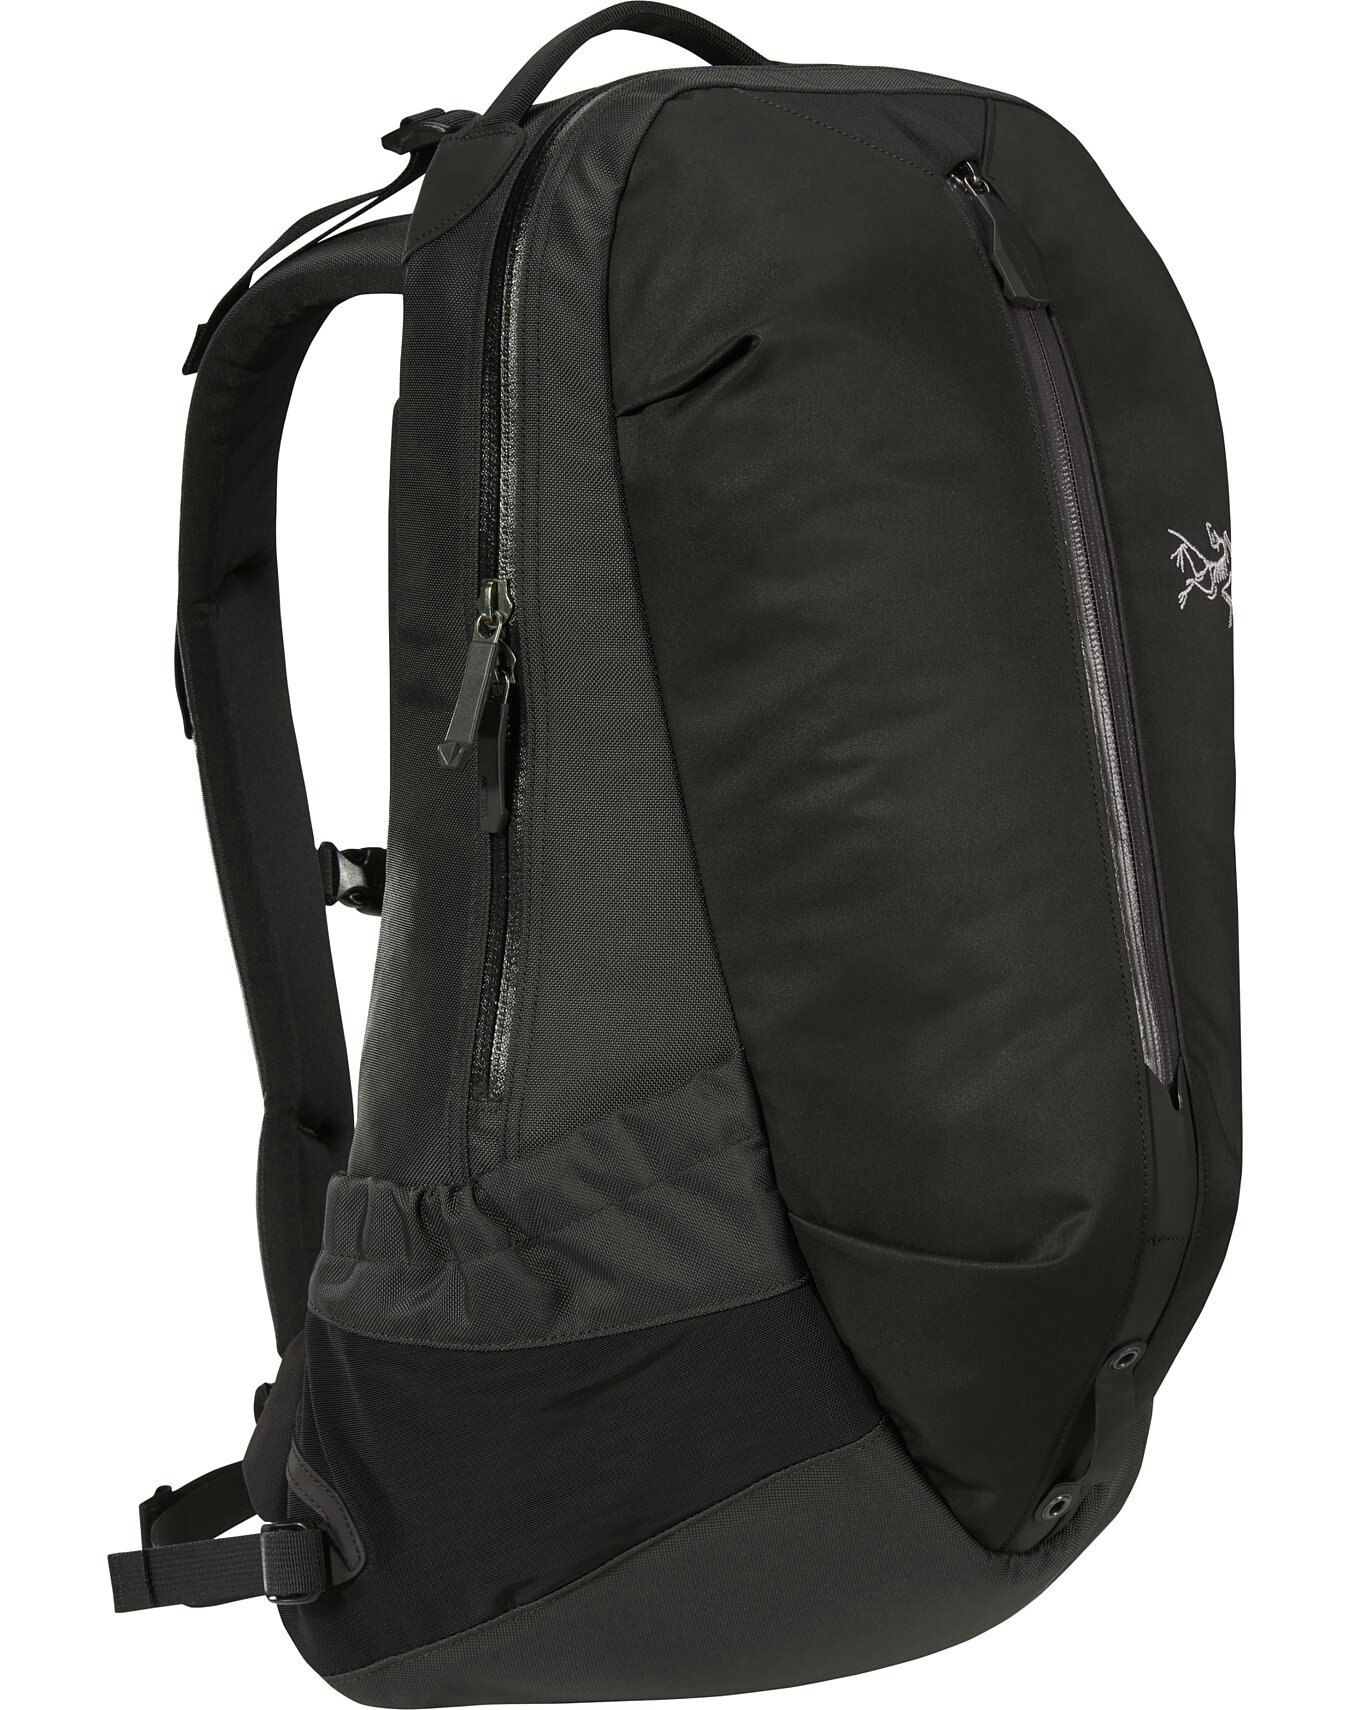 Arro 22 Backpack Carbon Copy